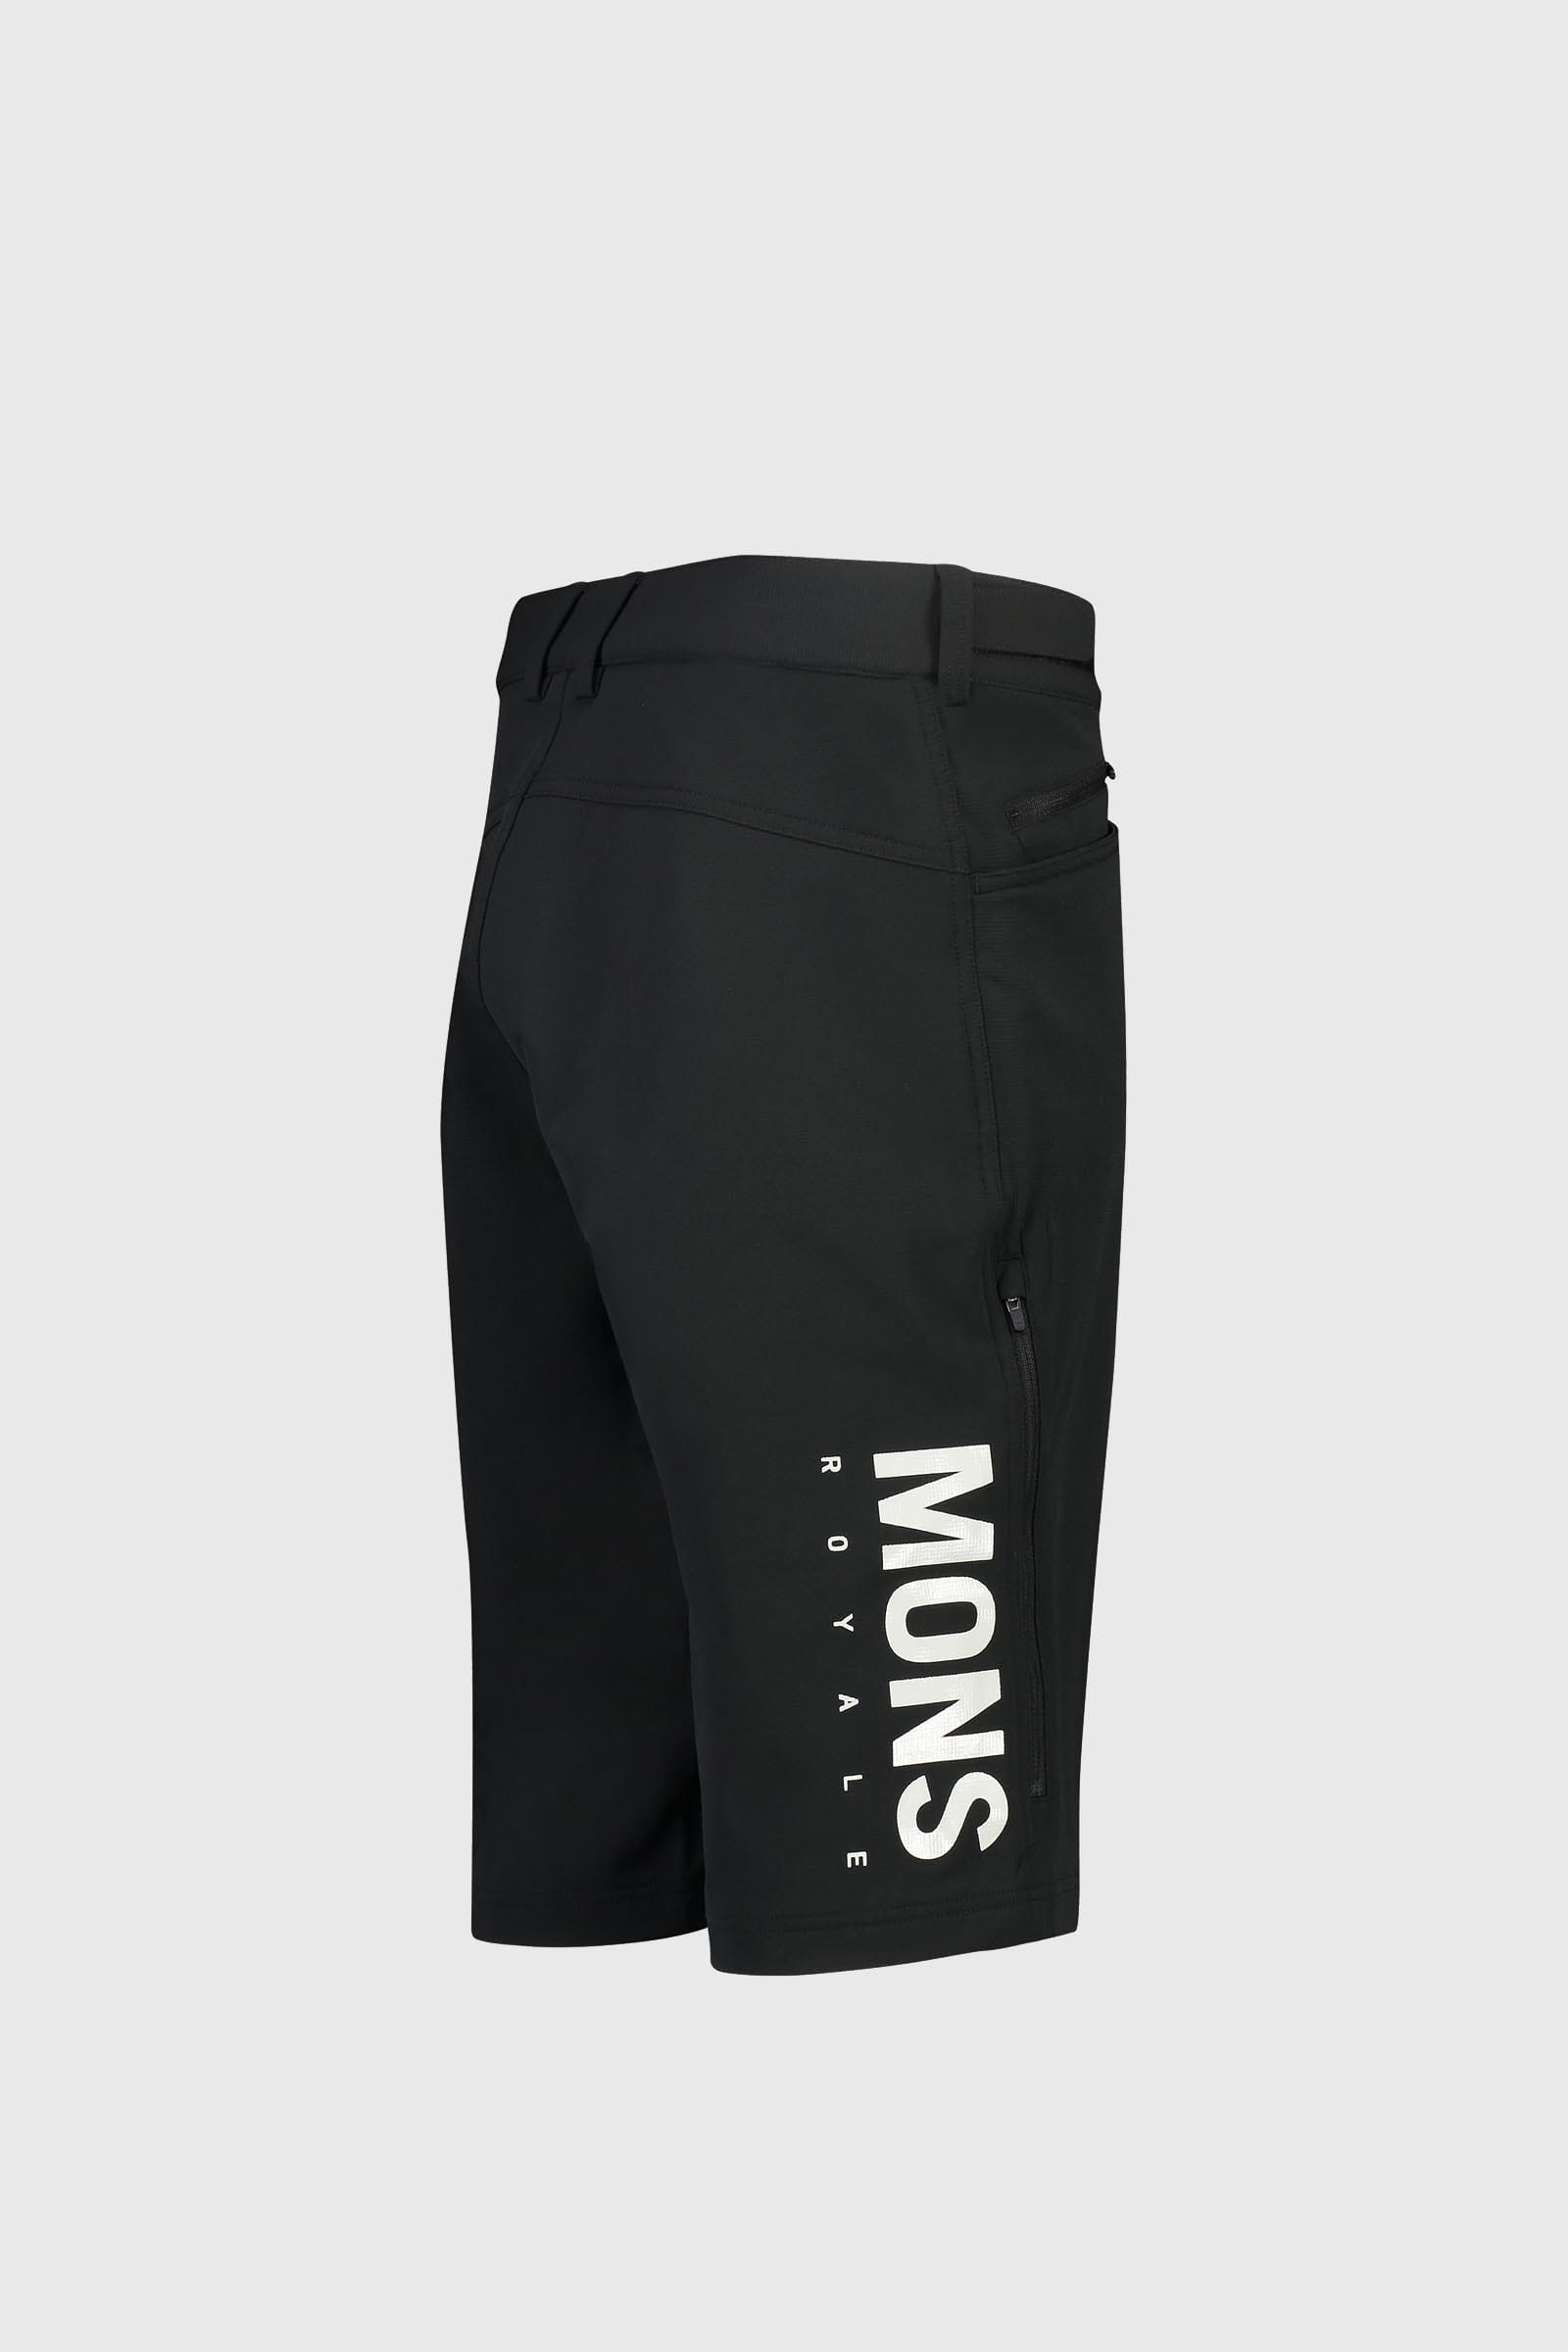 mons royale momentum shorts